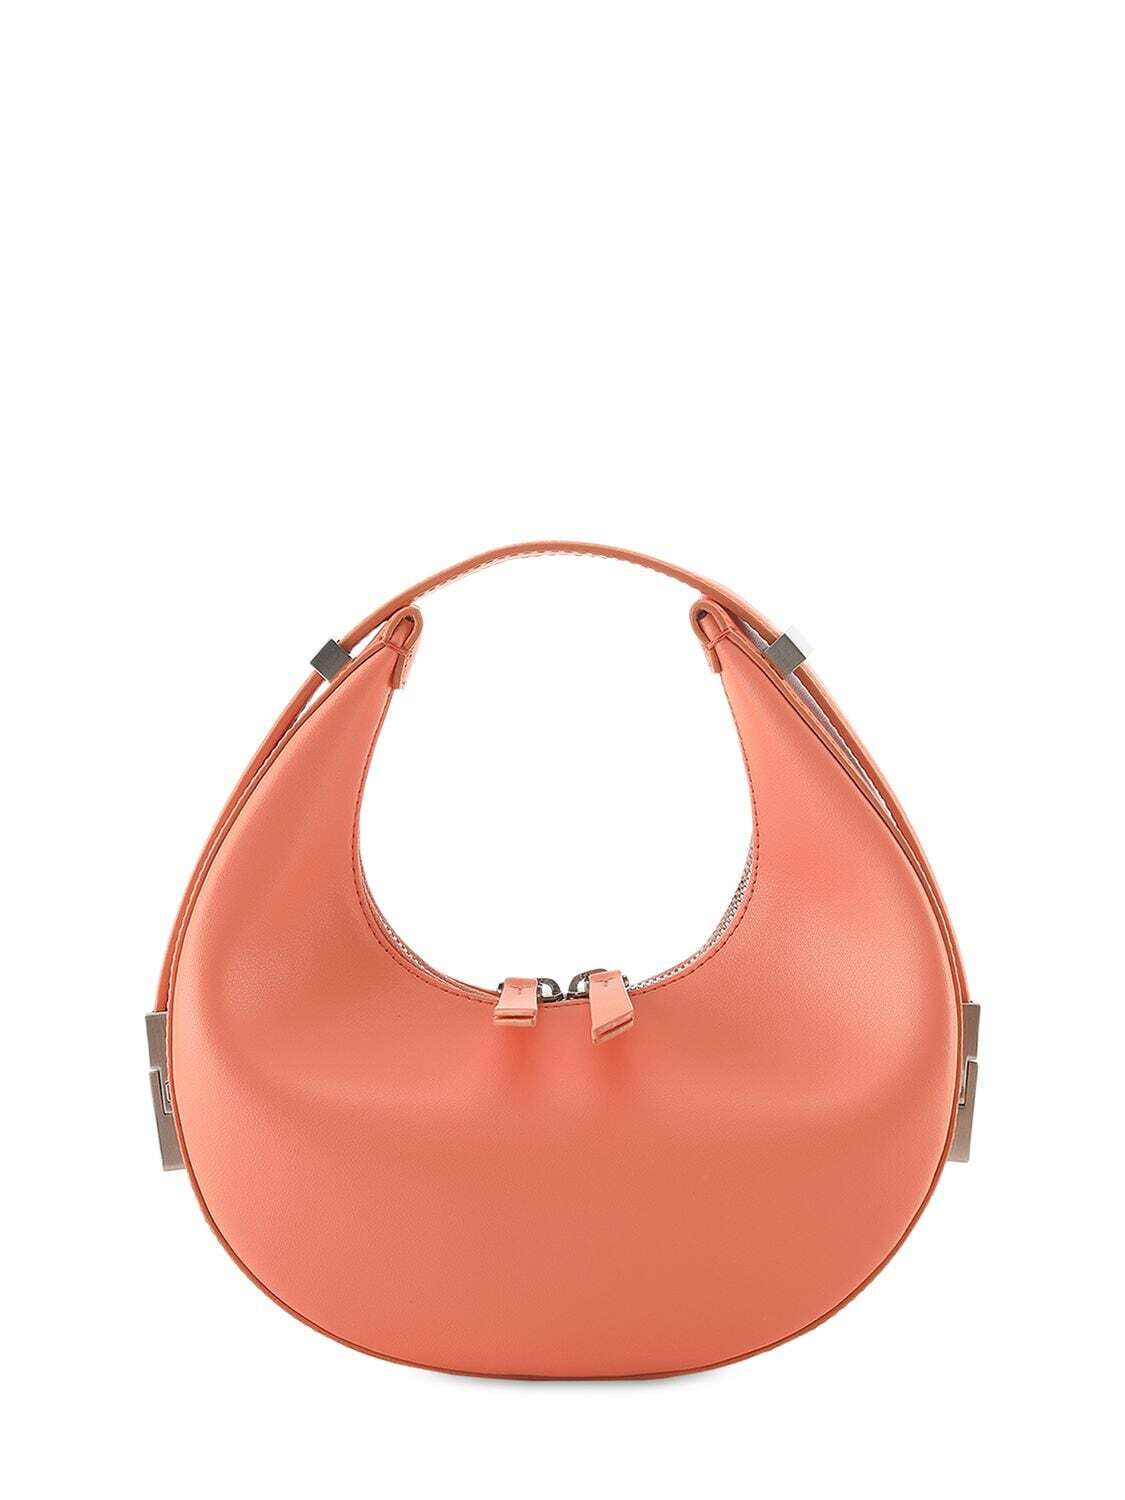 OSOI Mini Tony Leather Top Handle Bag in pink